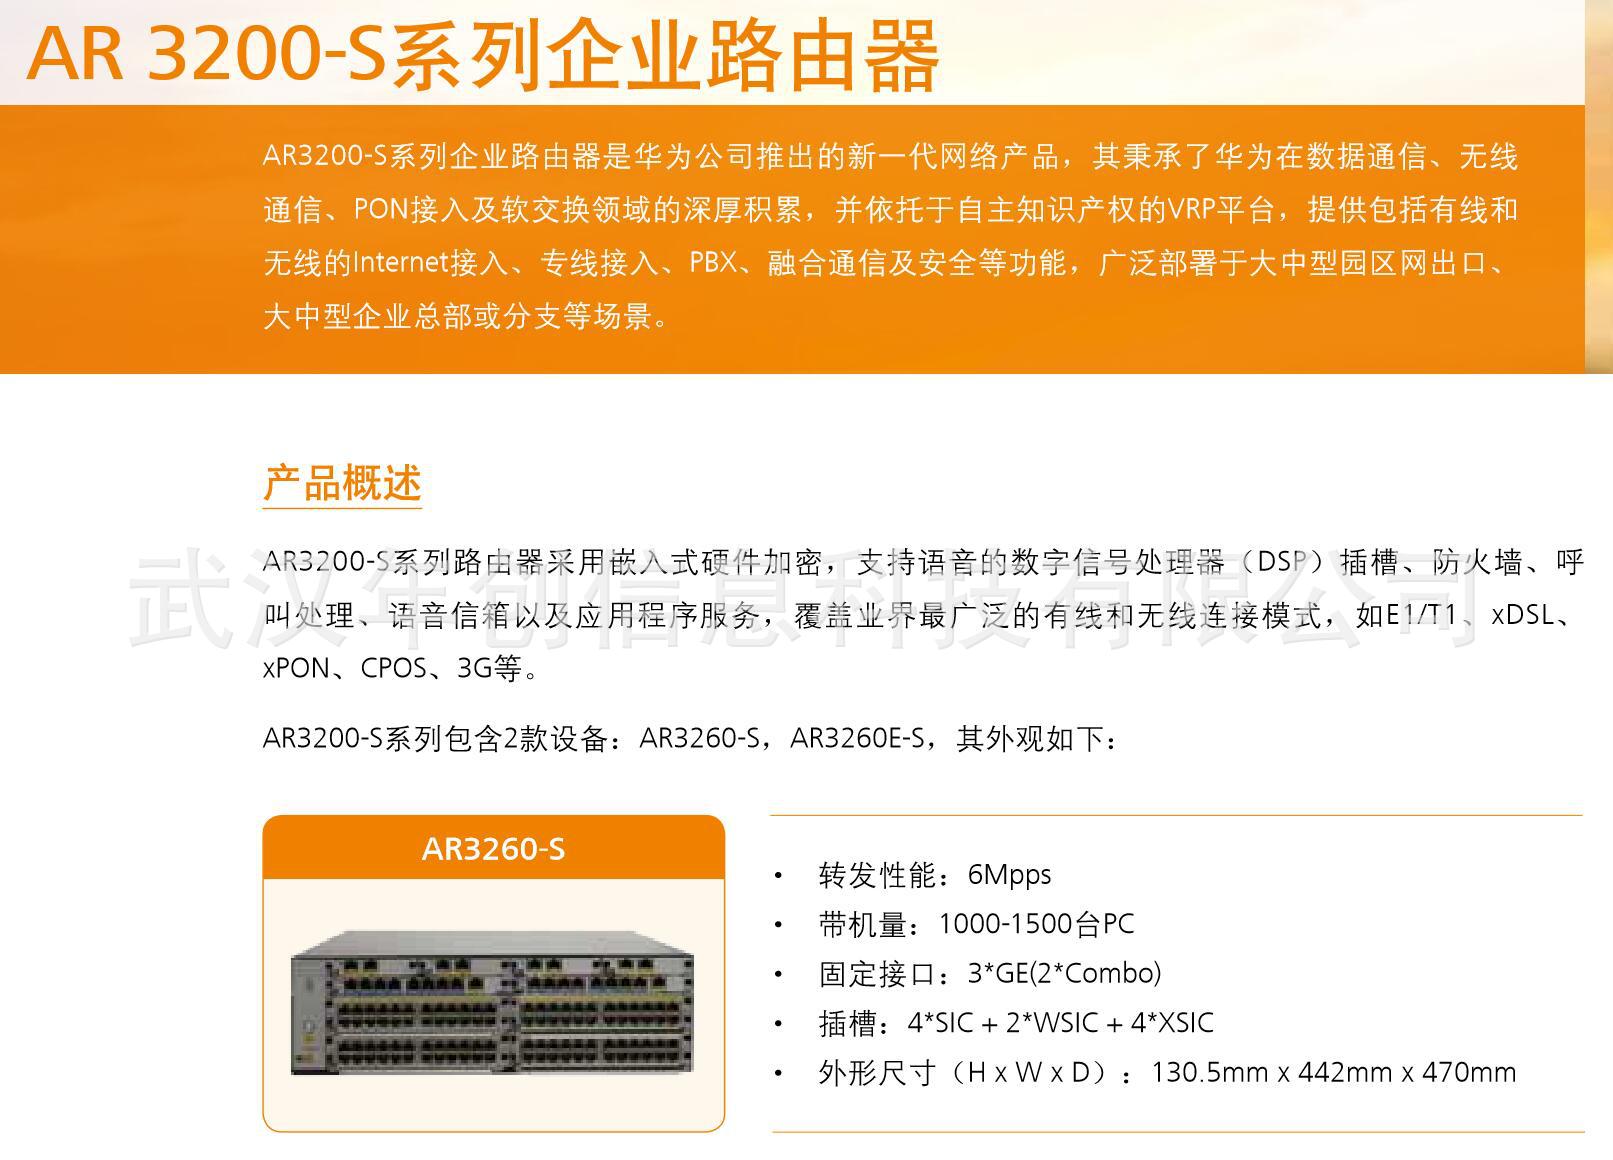 AR3260-S  3*GE(2*Combo)高端企业级集成路由器示例图1